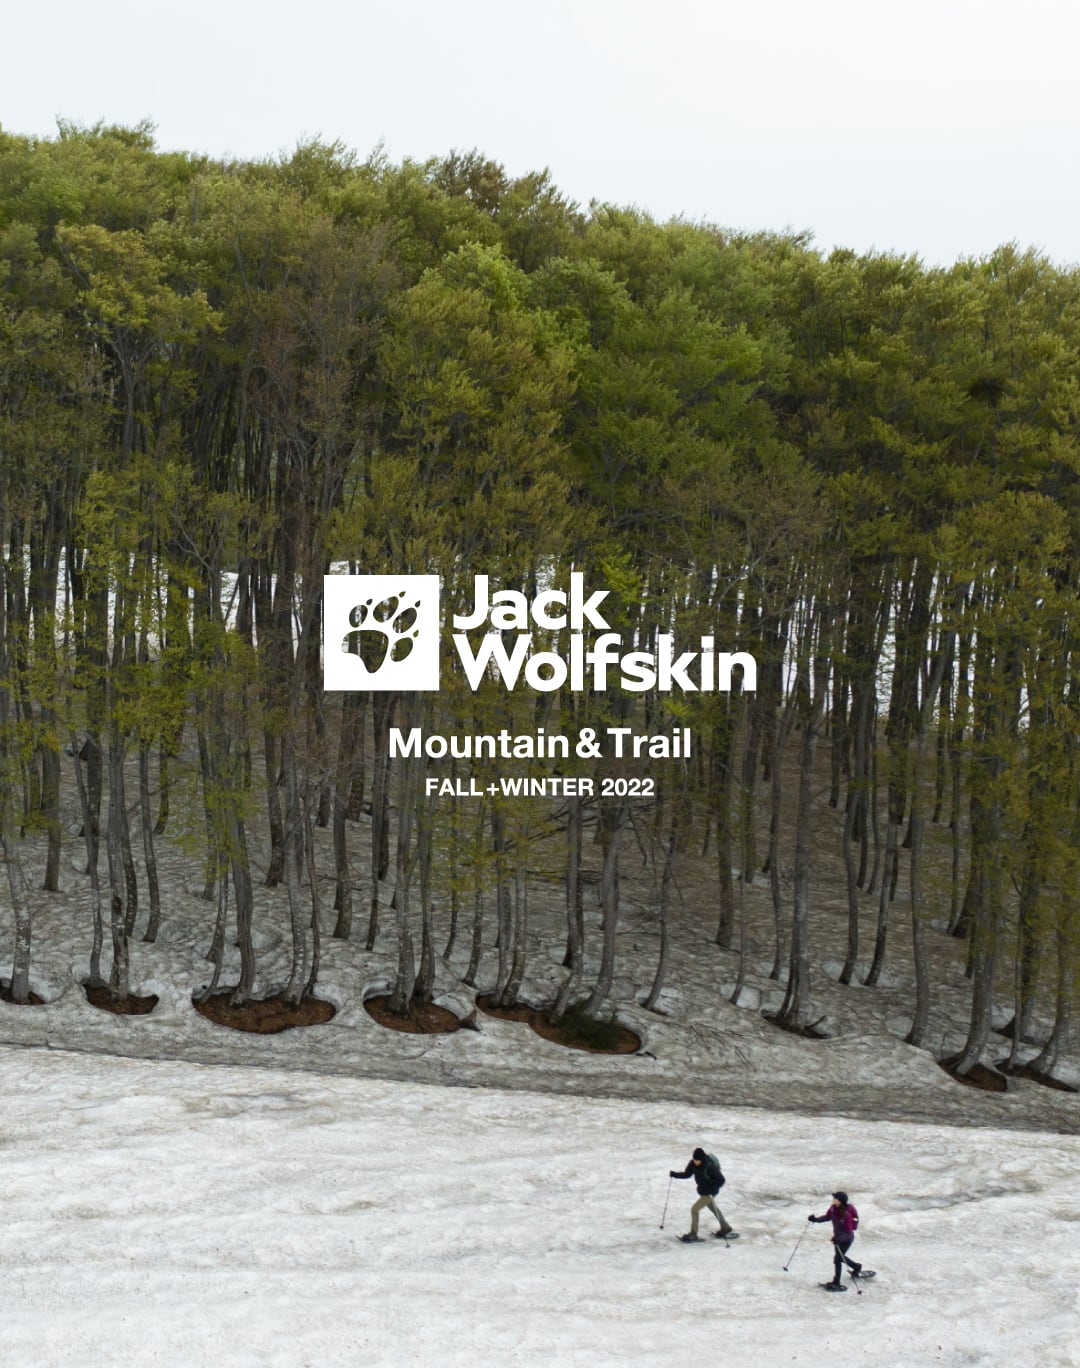 Jack Wolfskin Mountain & Trail